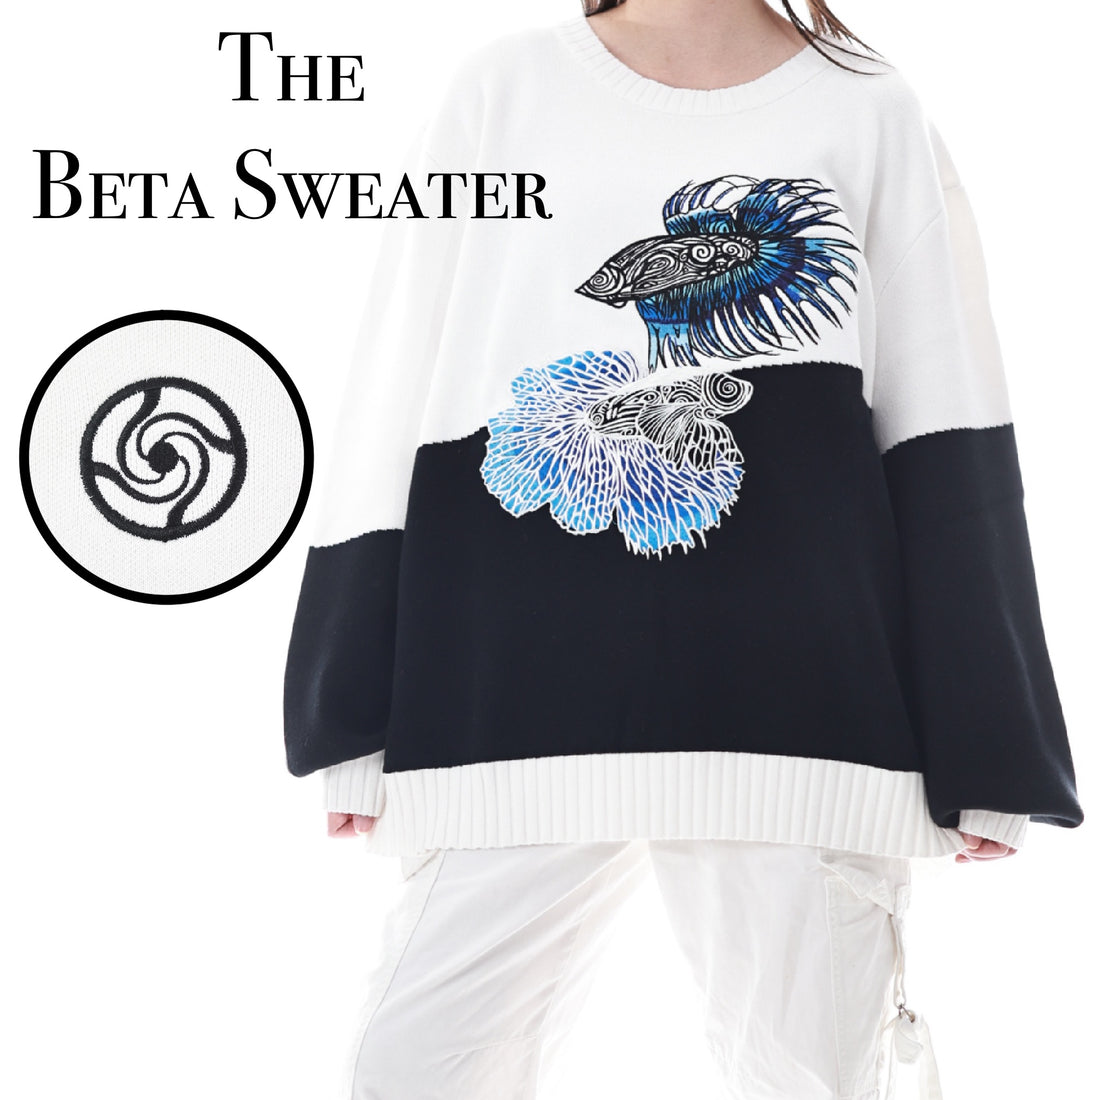 Beta Sweater Preorder